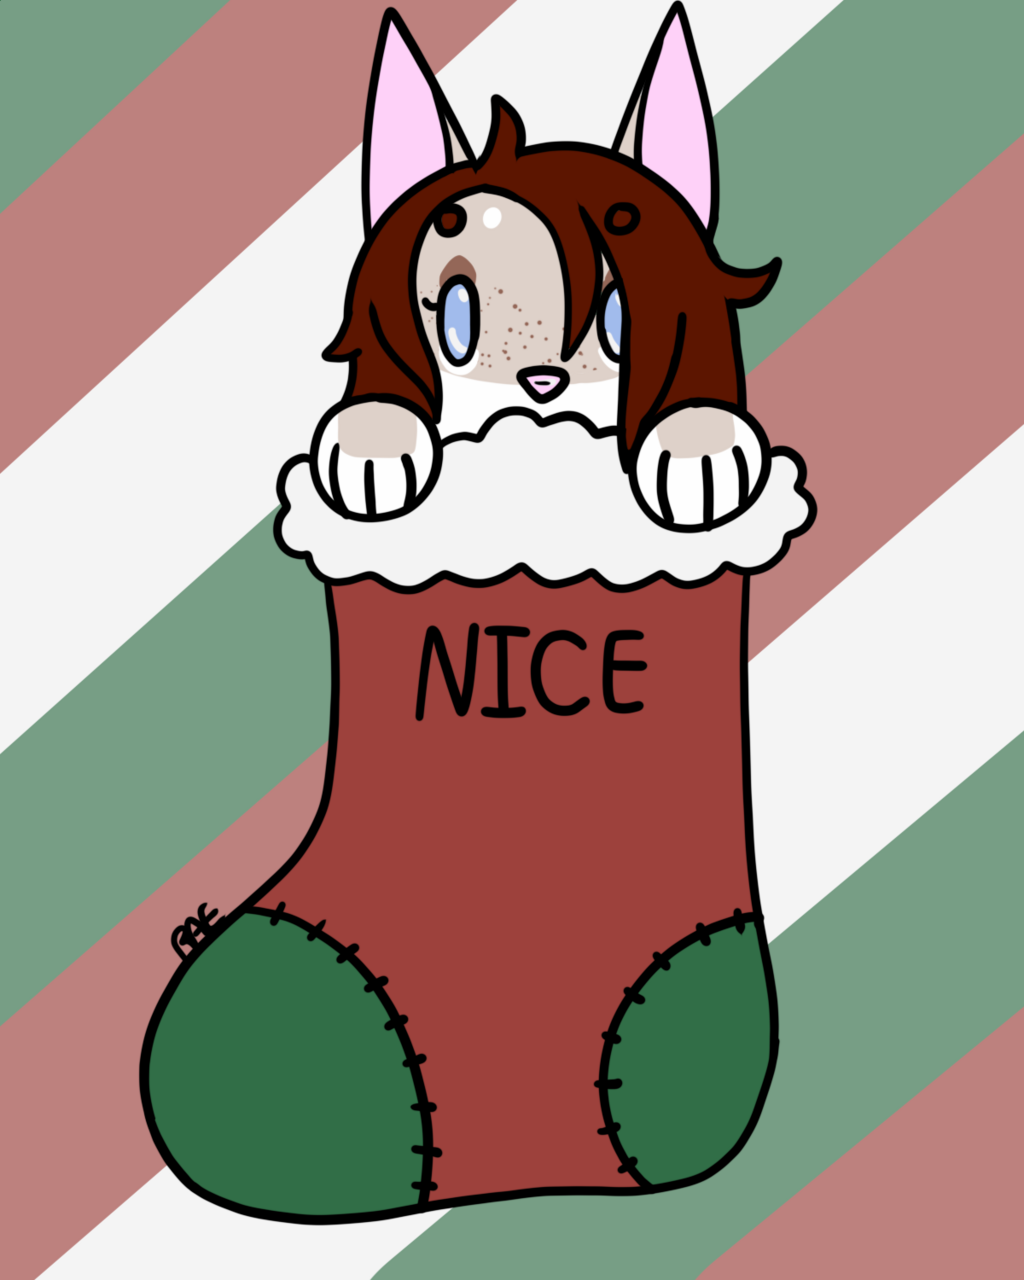 Most recent image: Savannah stocking